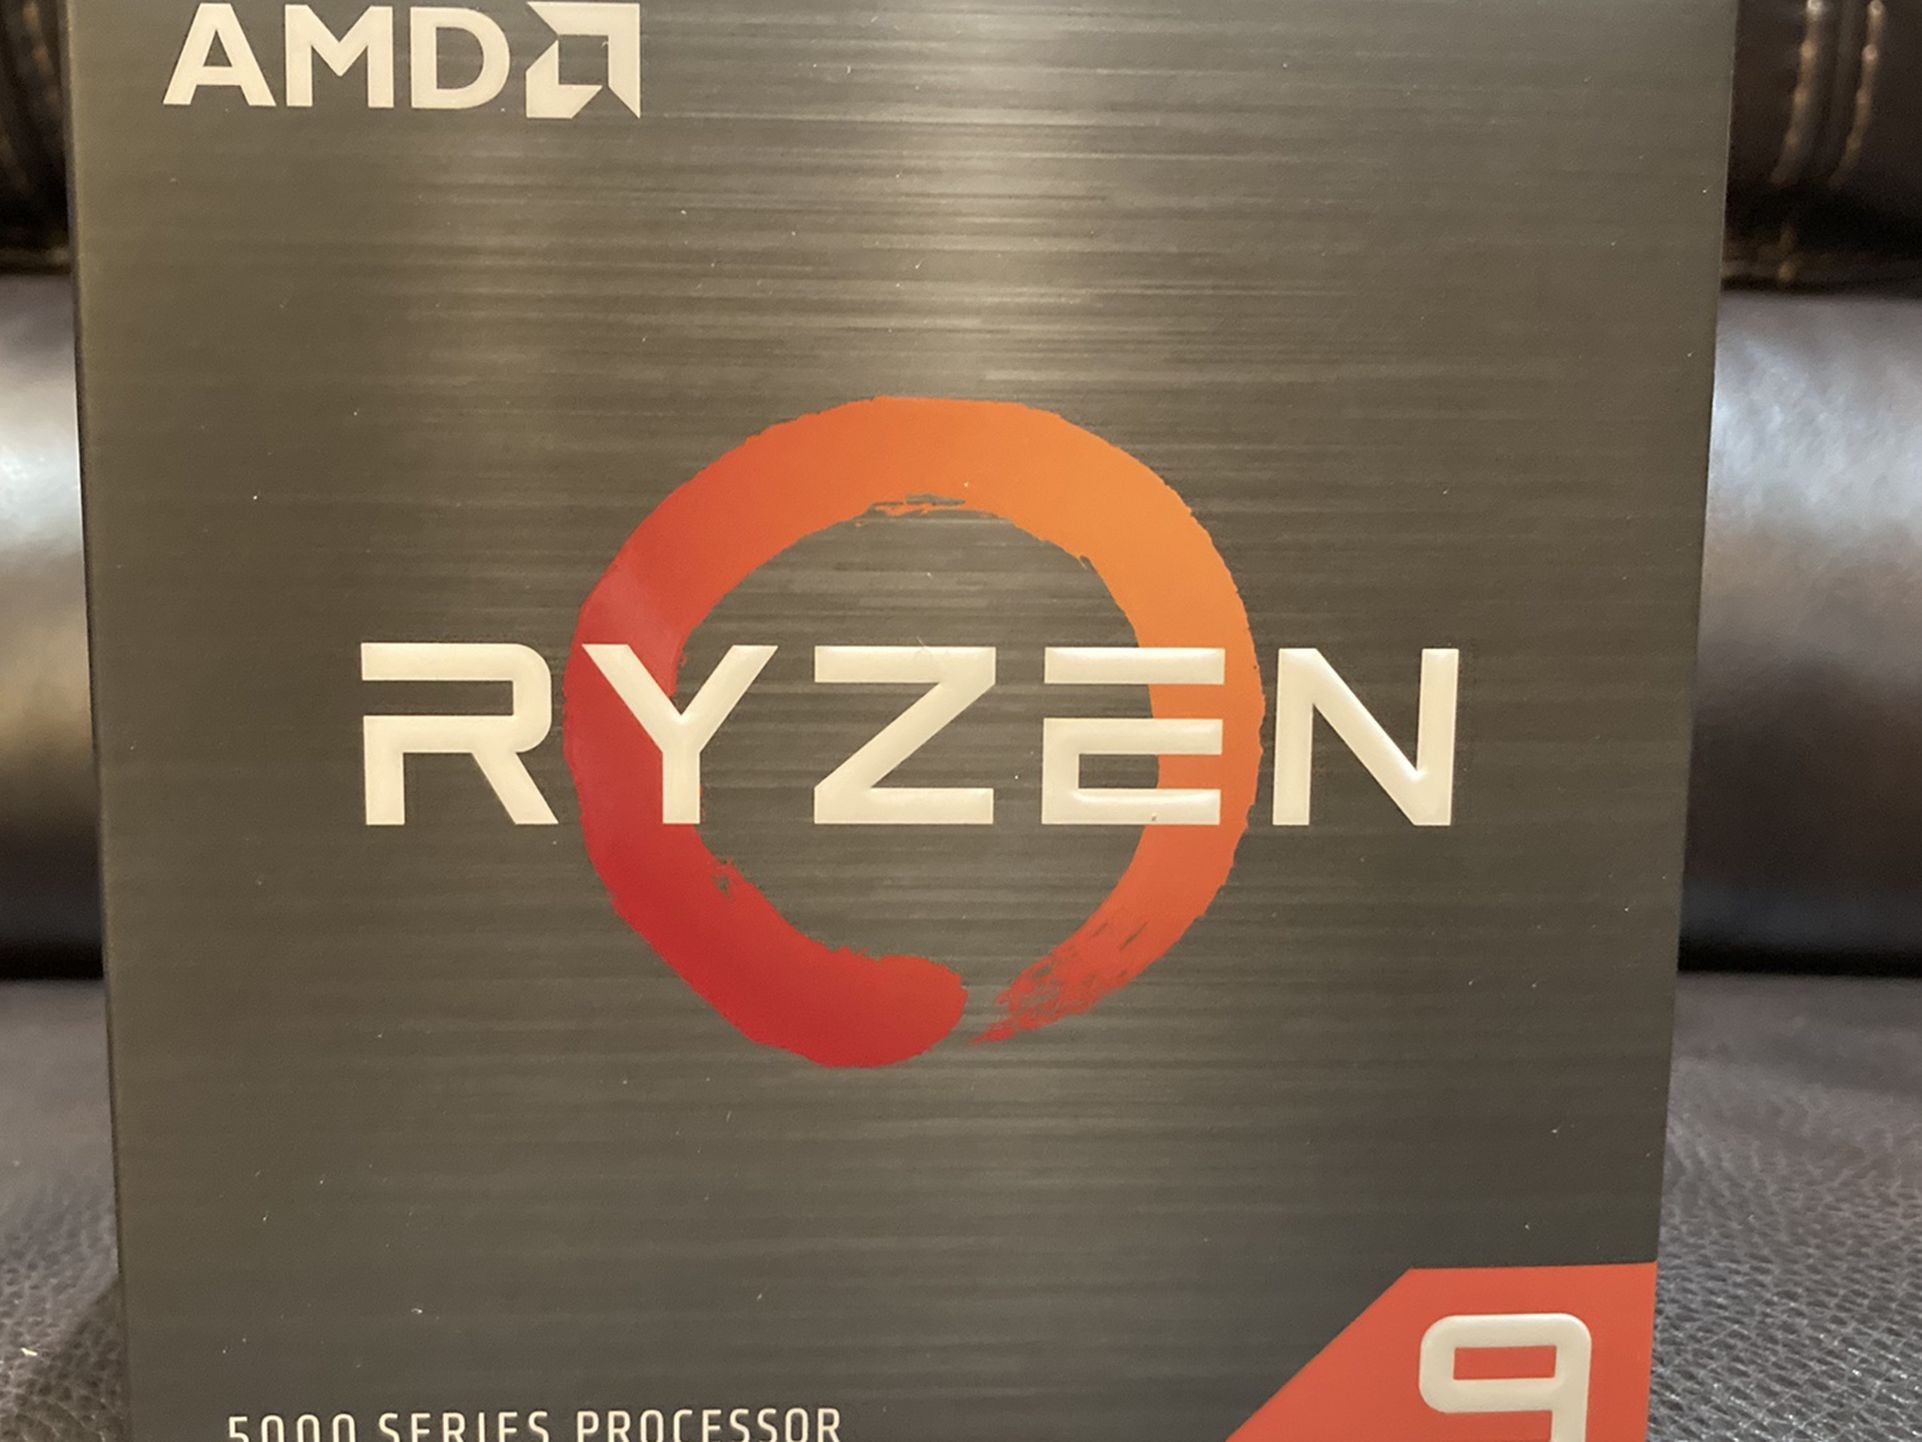 AMD Ryzen 9 5900X Desktop Processor (4.8GHz, 12 Cores, Socket AM4)